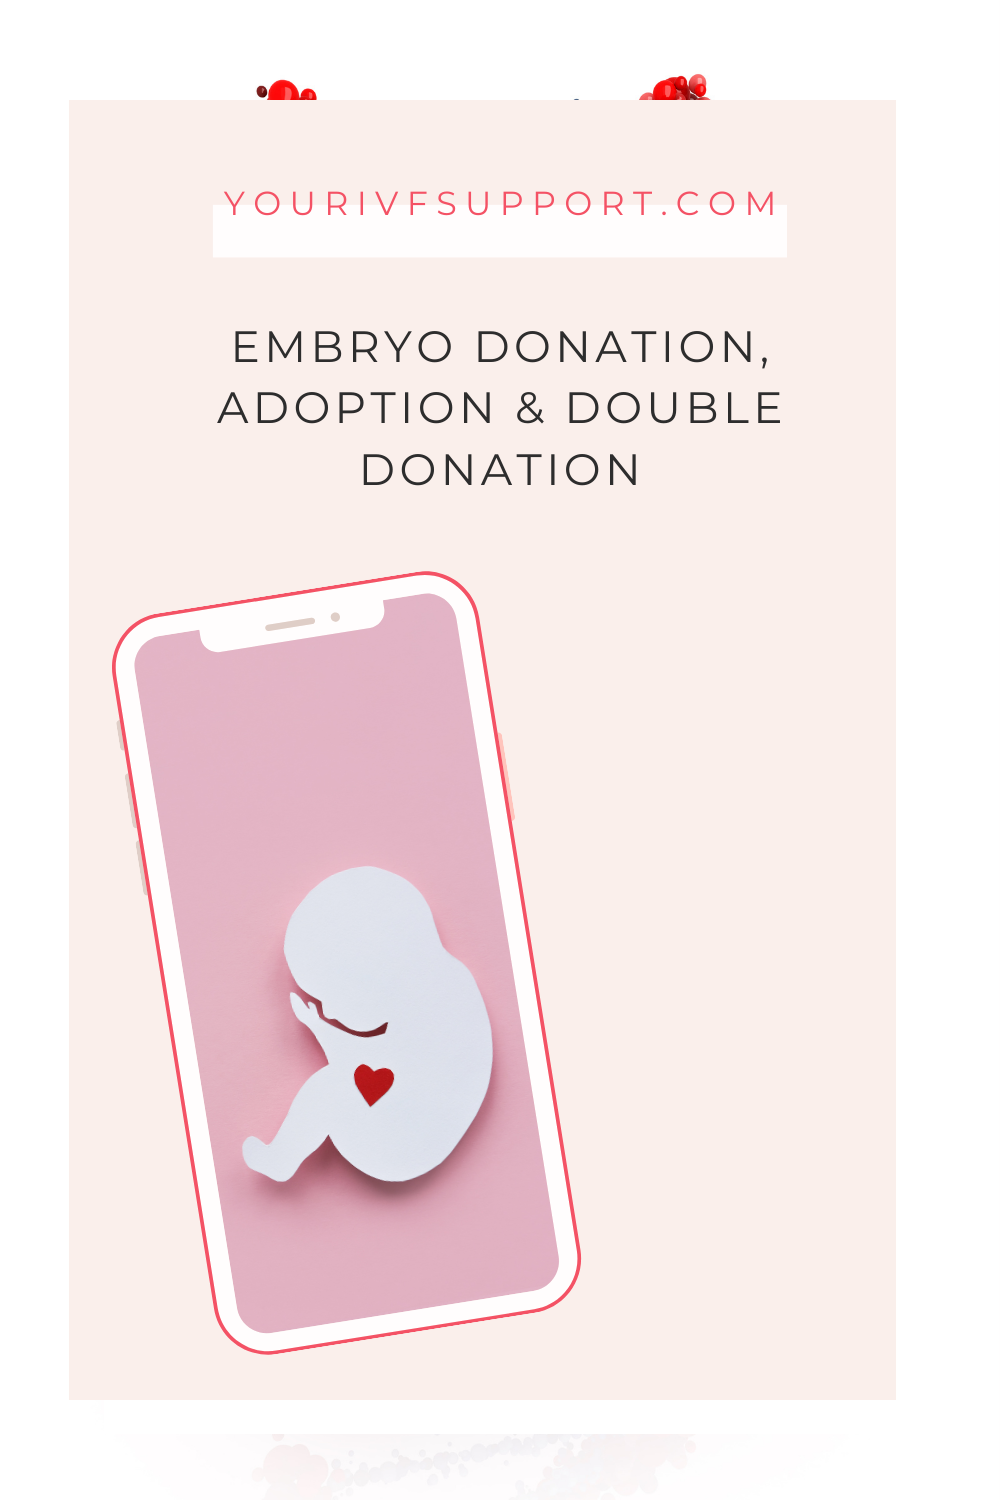 Embryo Donation and Adoption